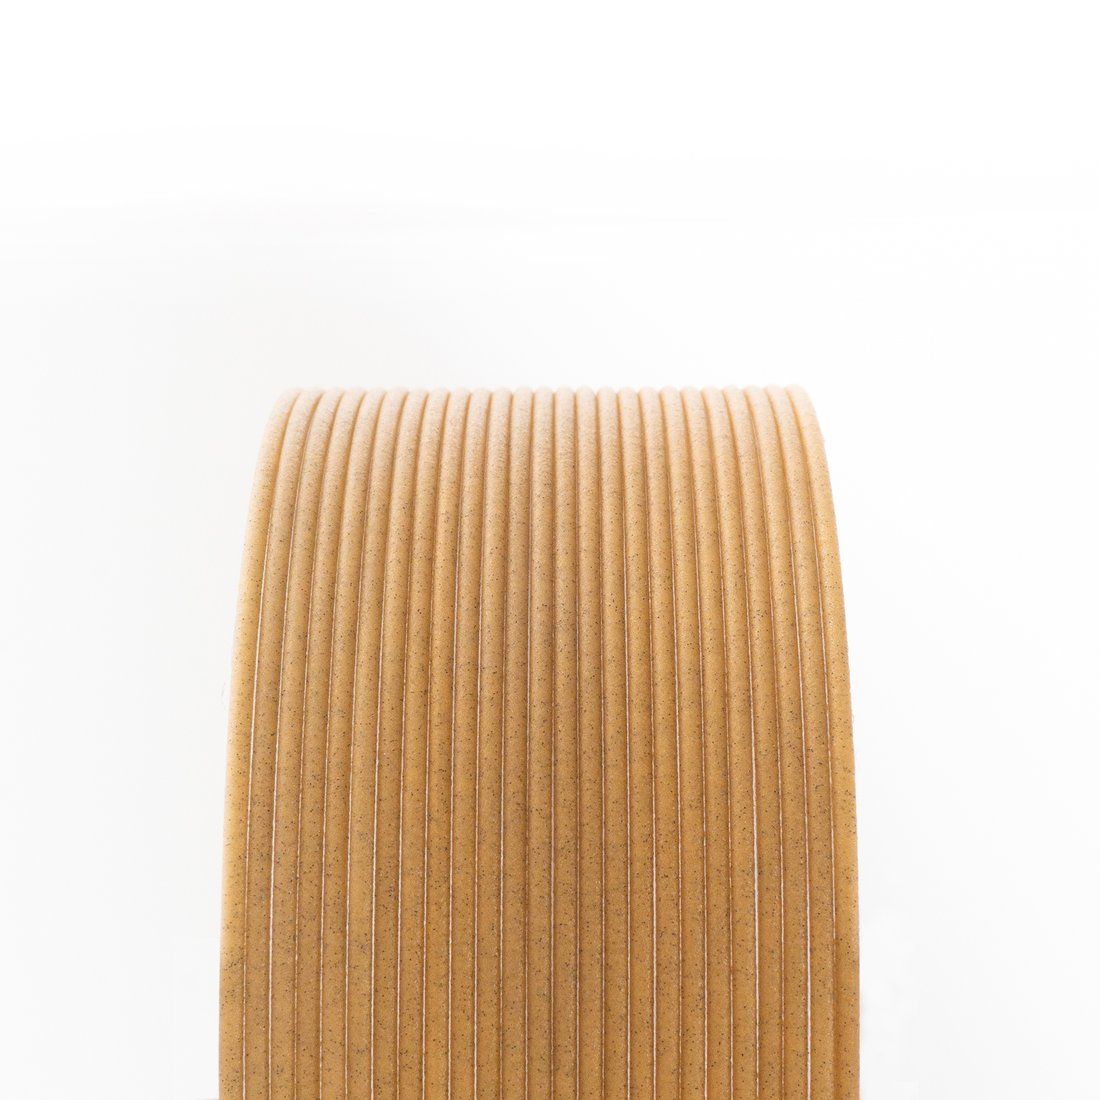 Matte Fiber HTPLA - Daffodil Wood 1.75mm 3D printing Filament 500gms